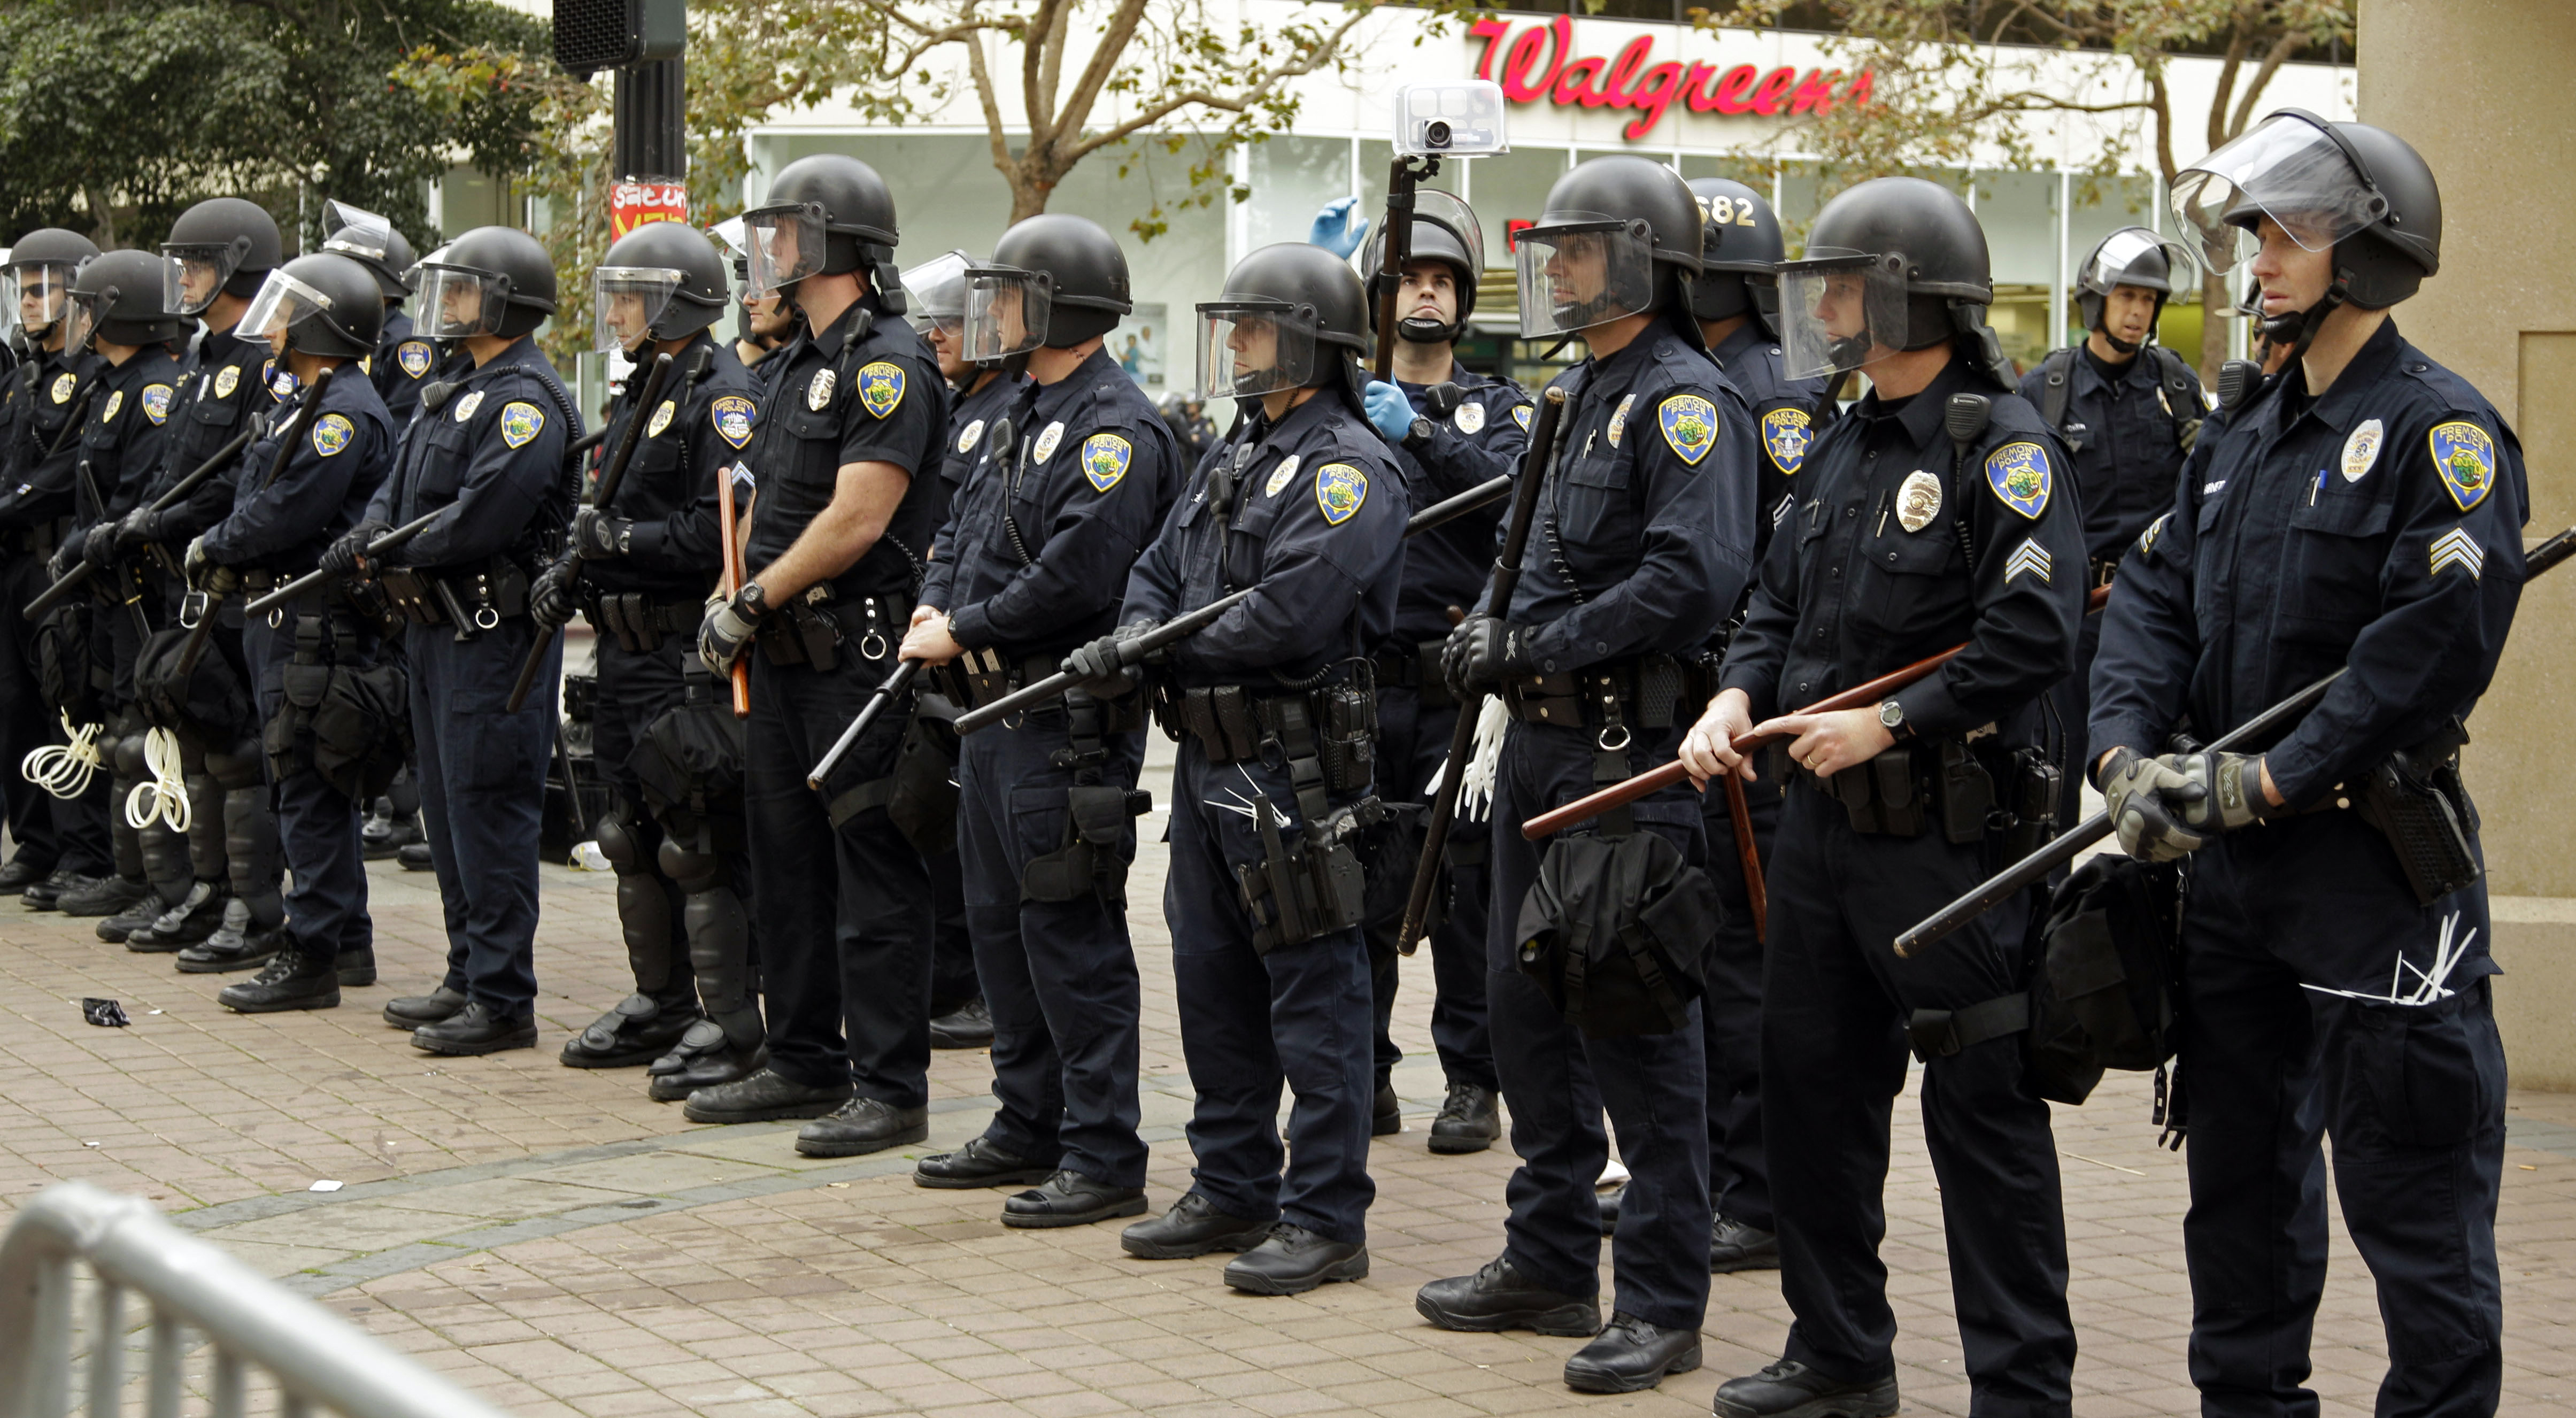 Tårgas, Occupy Oakland, Demonstration, Occupy Wall Street, Granater, Polisen